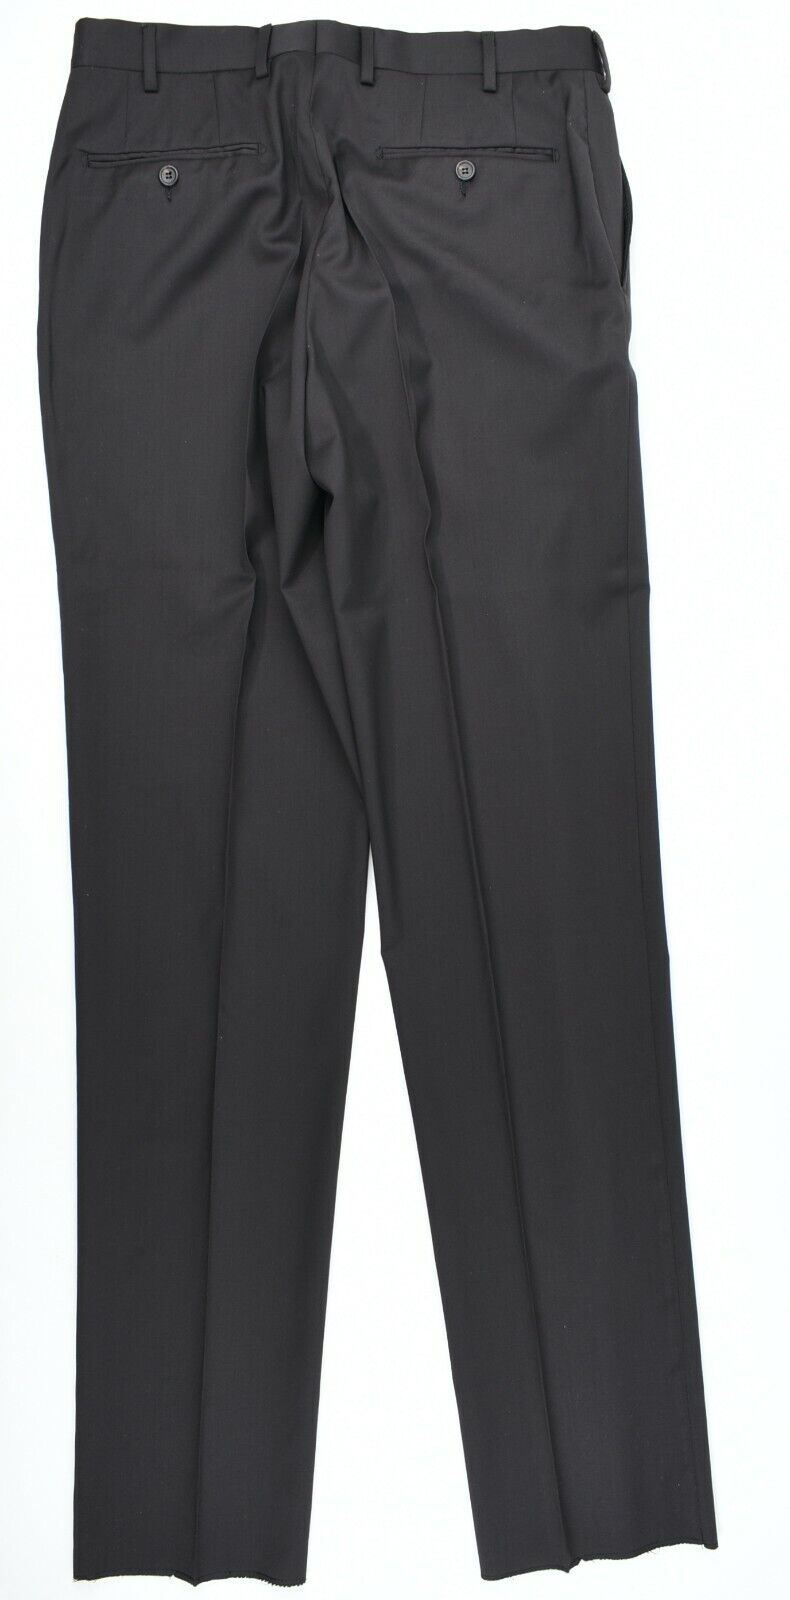 PAL ZILERI Men's Black Trousers, 100% Wool, Made in Italy, size W32